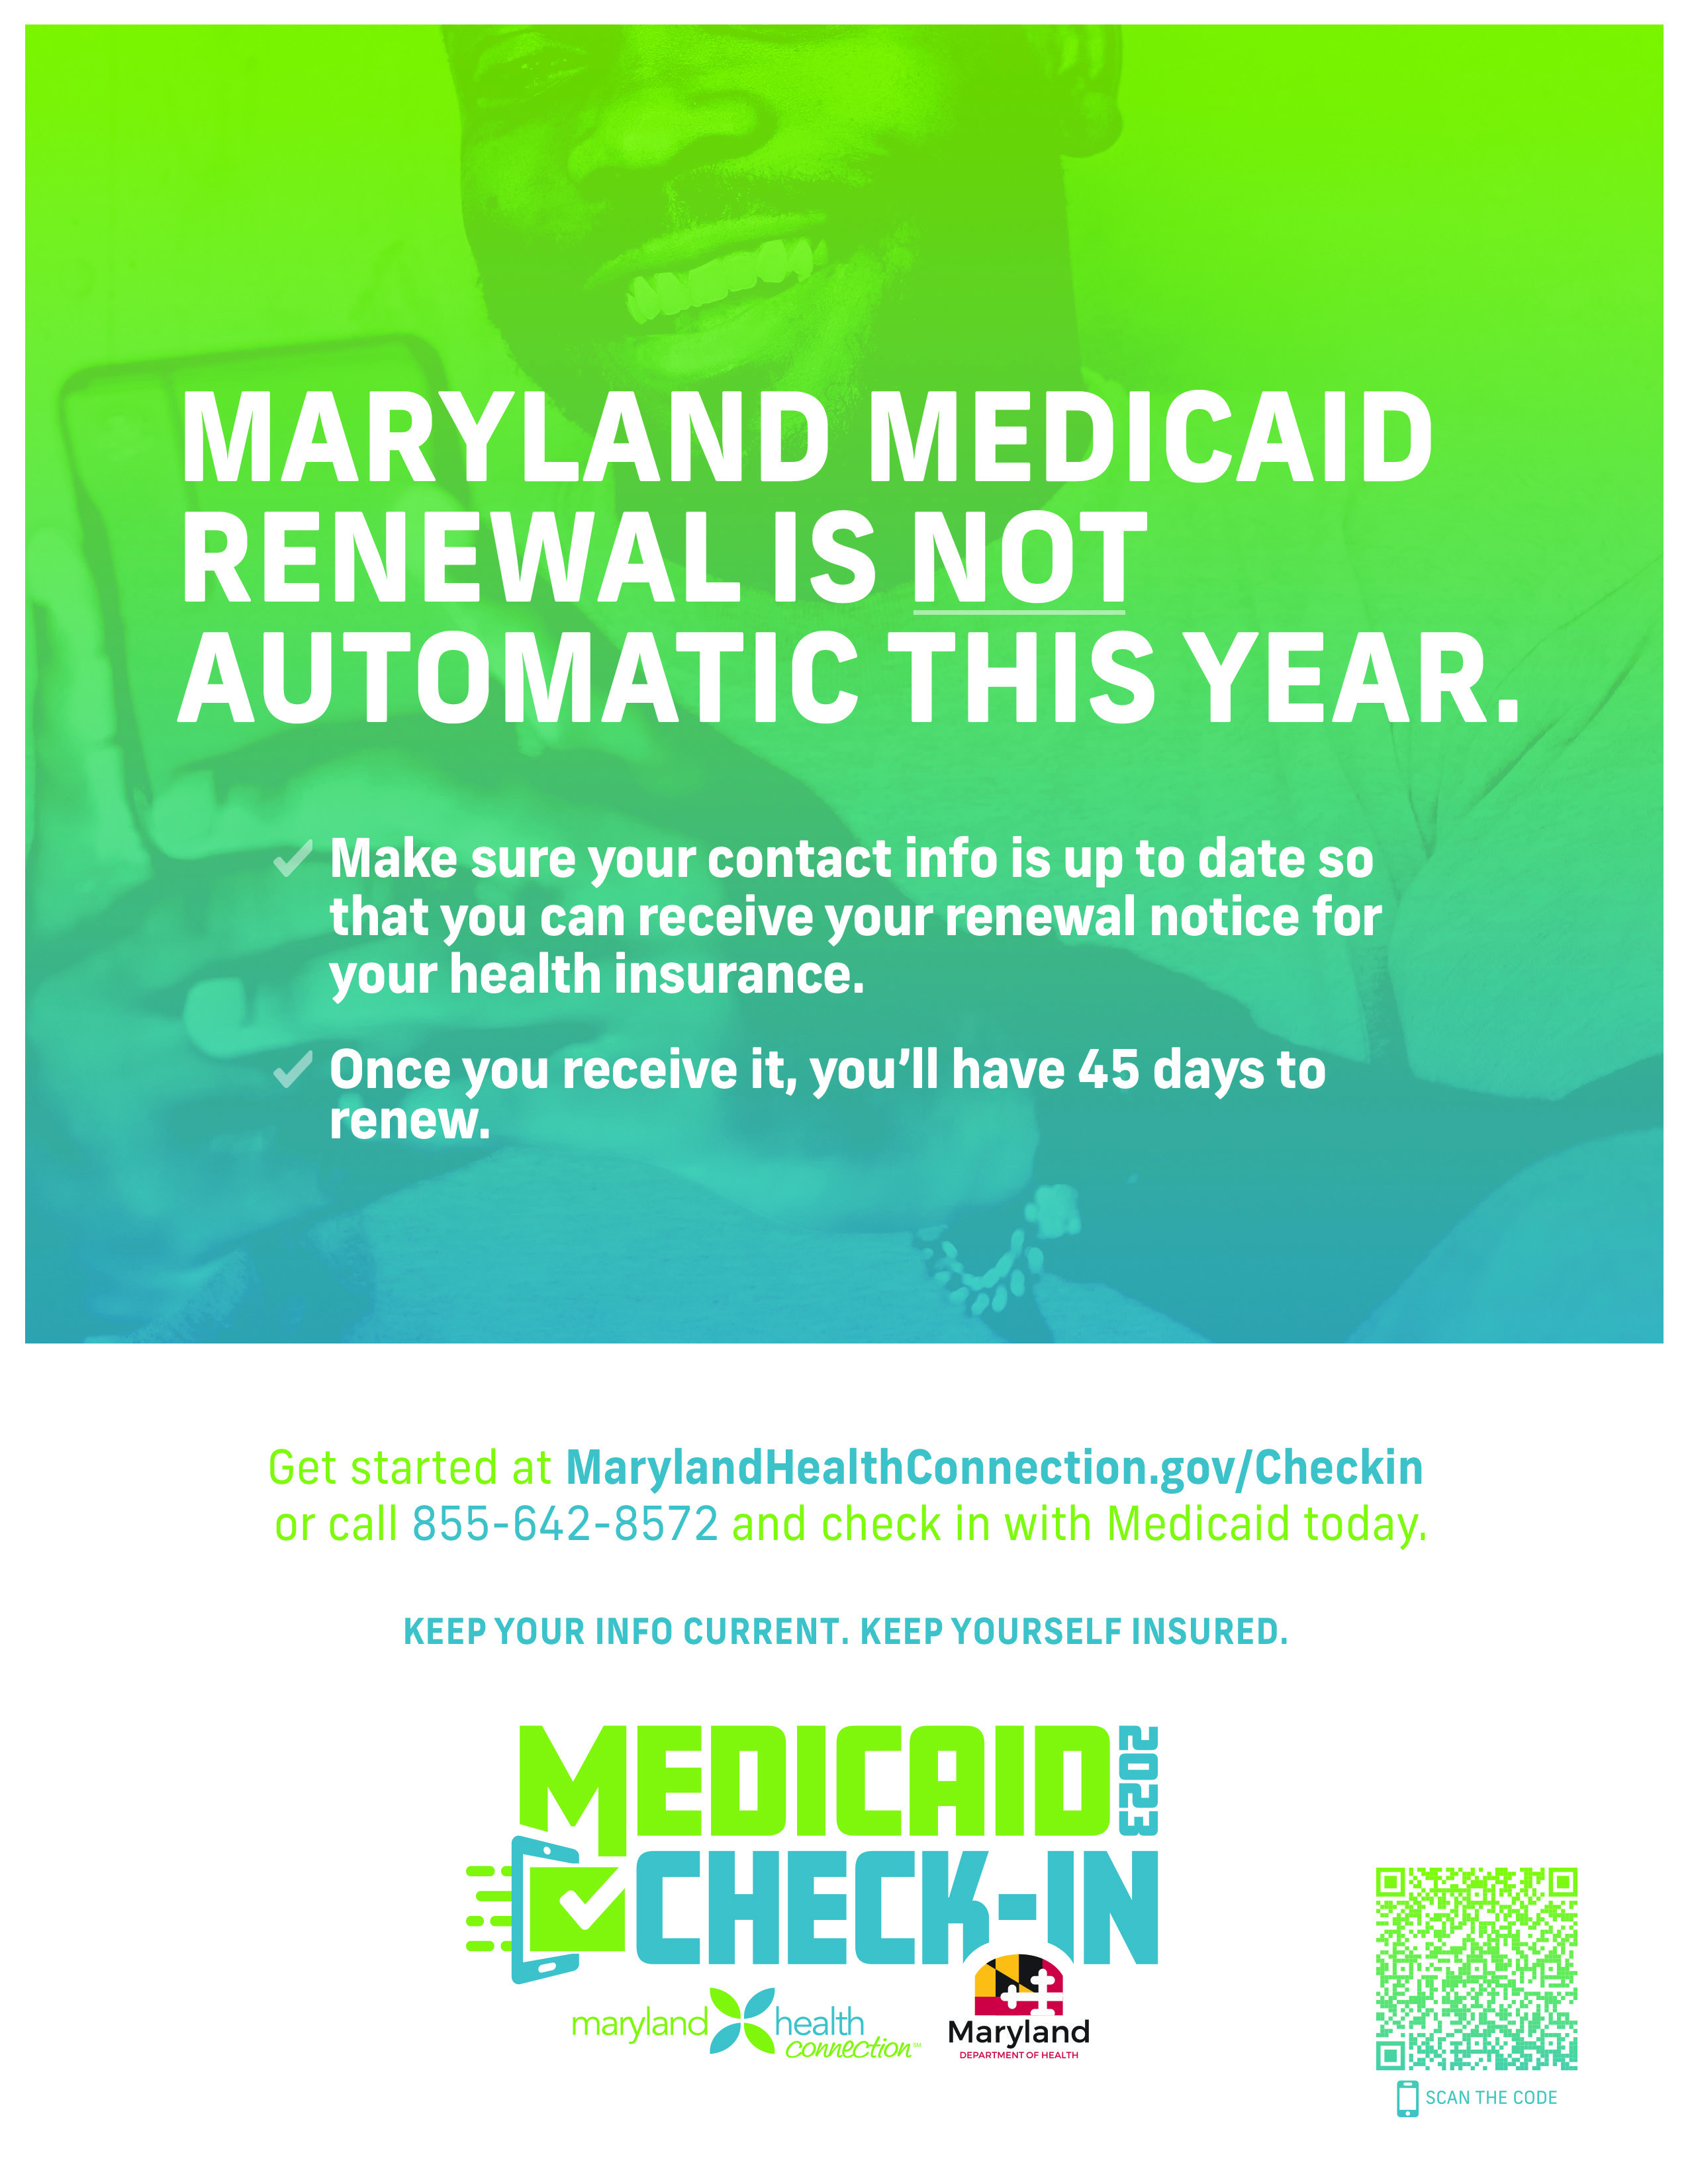 MD Medicaid flyer